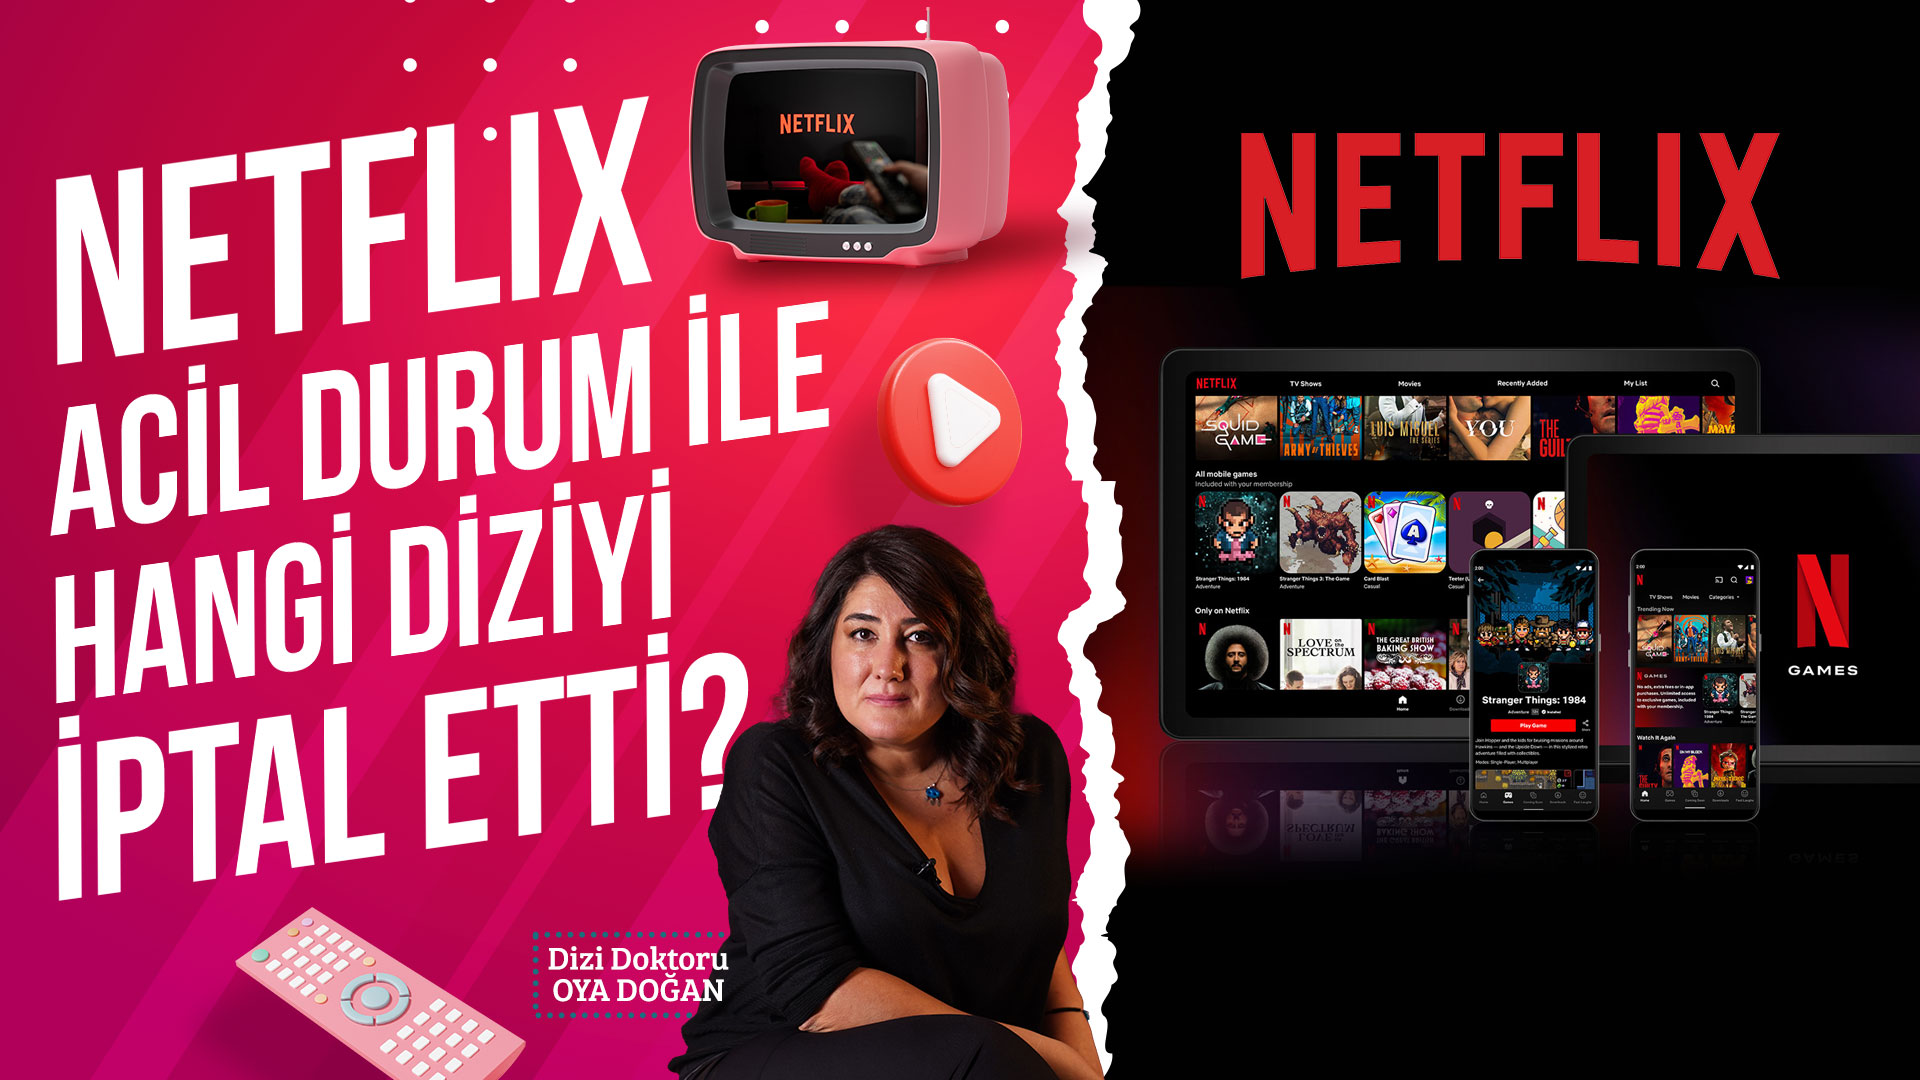 Netflix Hangi Diziyi Acil Durum ile İptal Etti? | Dizi Gündemi